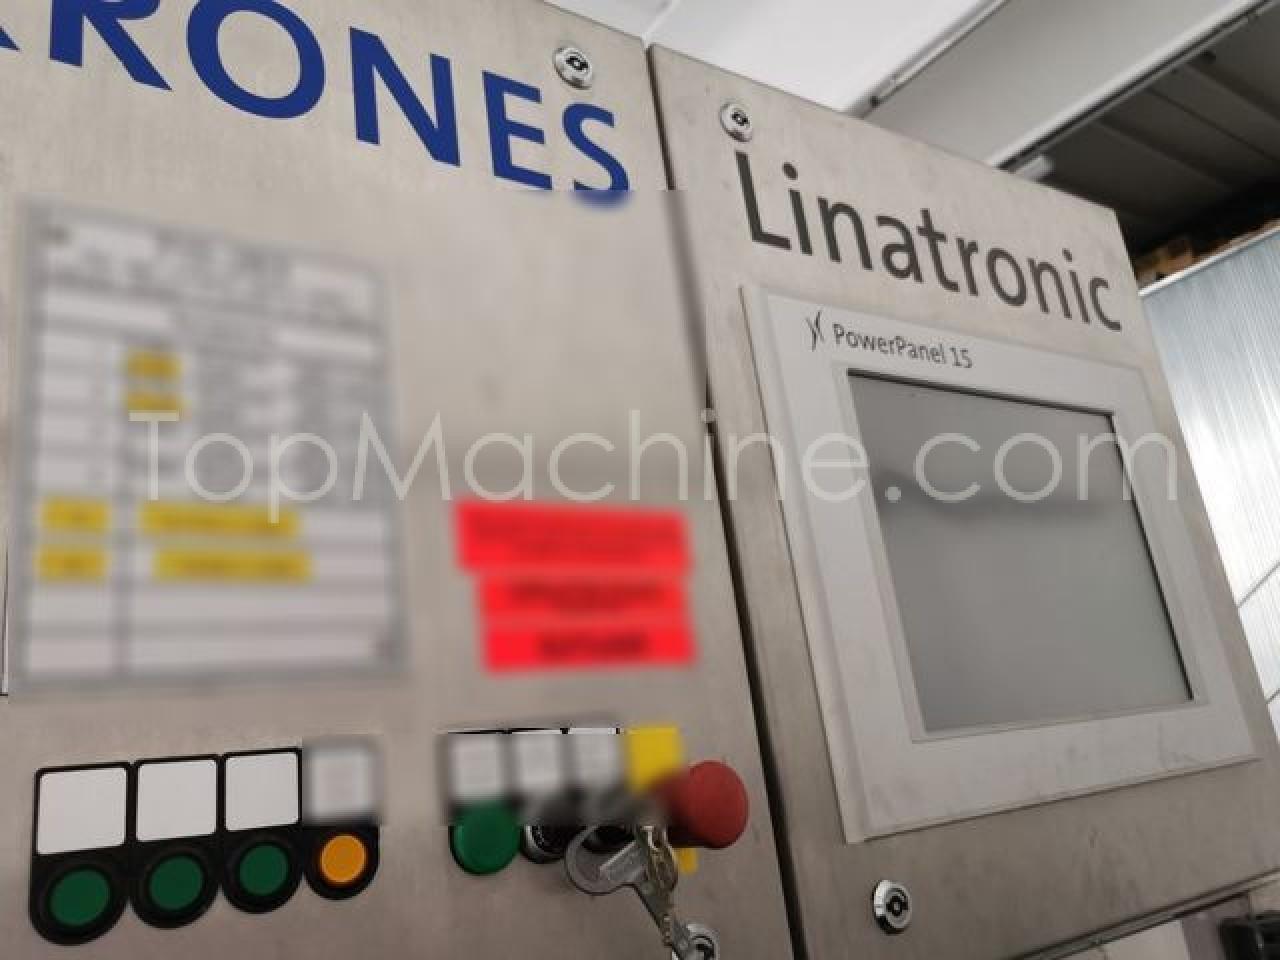 Used Krones Linatronic Getränkeindustrie Sonstige